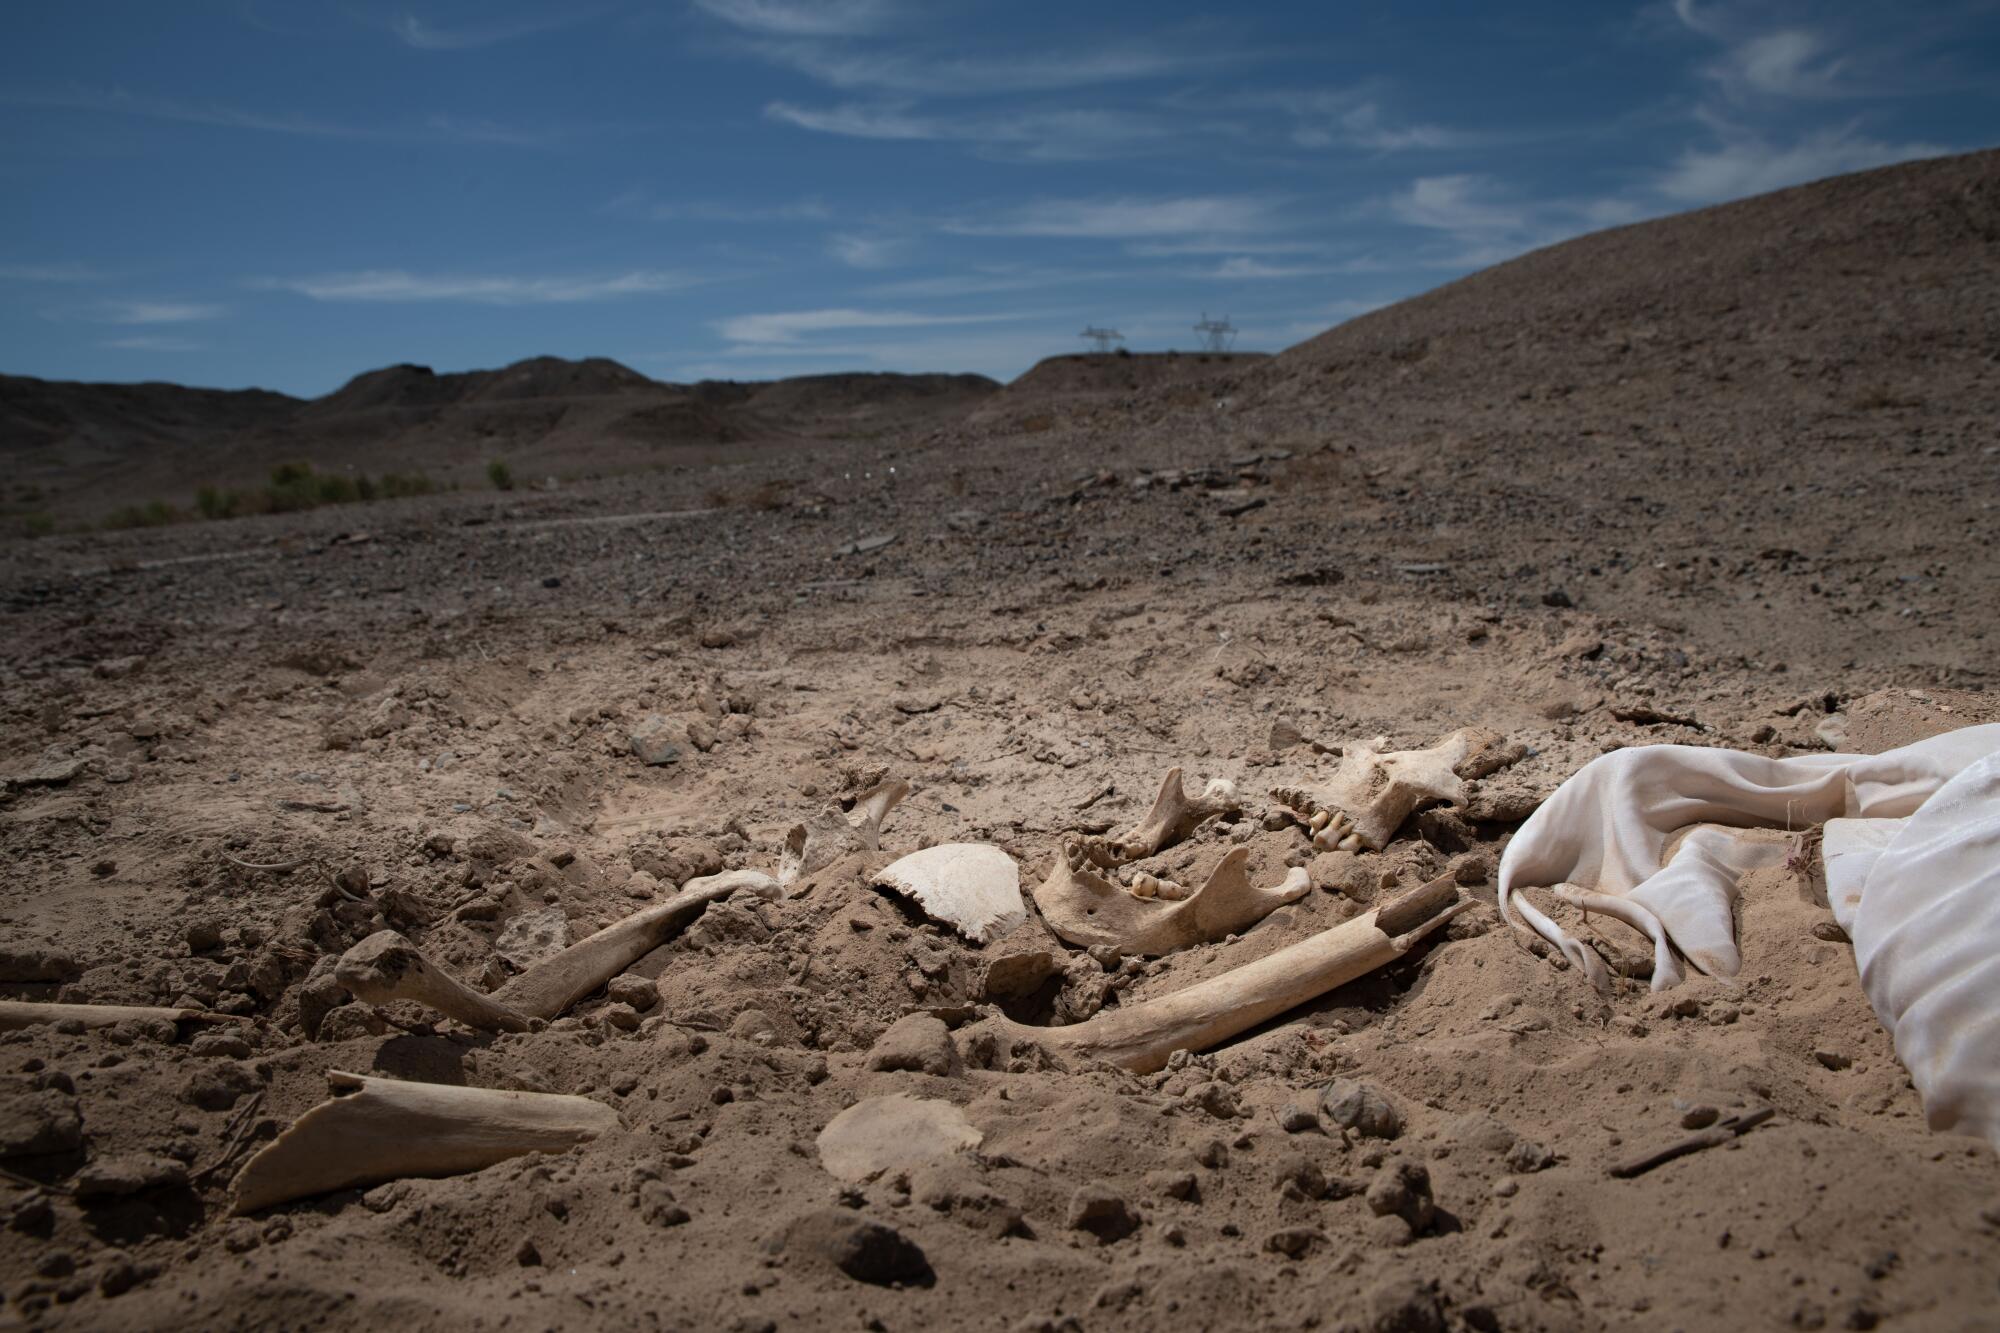 Skeletal human remains lie in the sand under blue skies